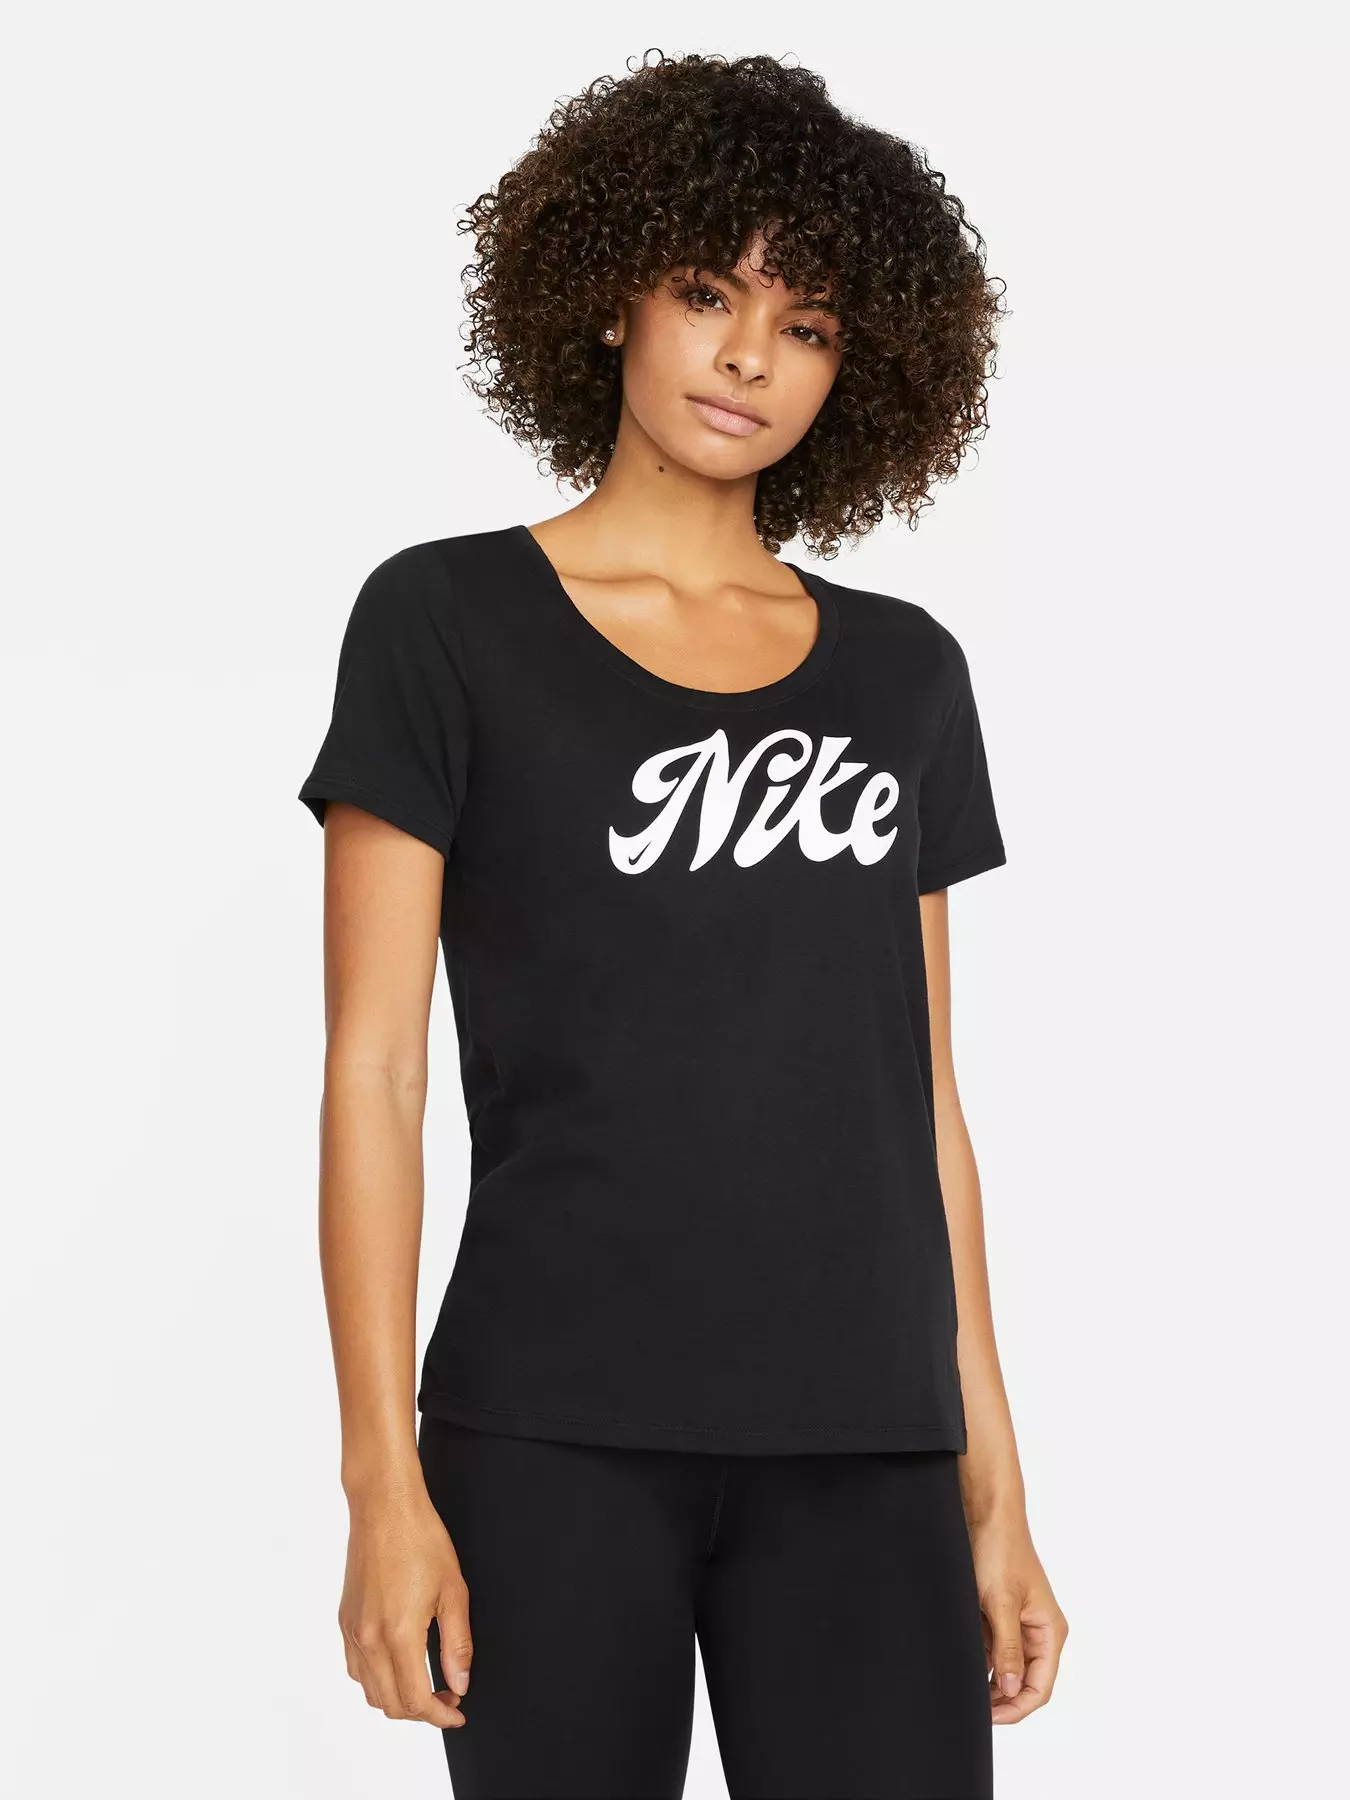 T-shirts | Womens sports clothing | & leisure | Nike | www.very.co.uk